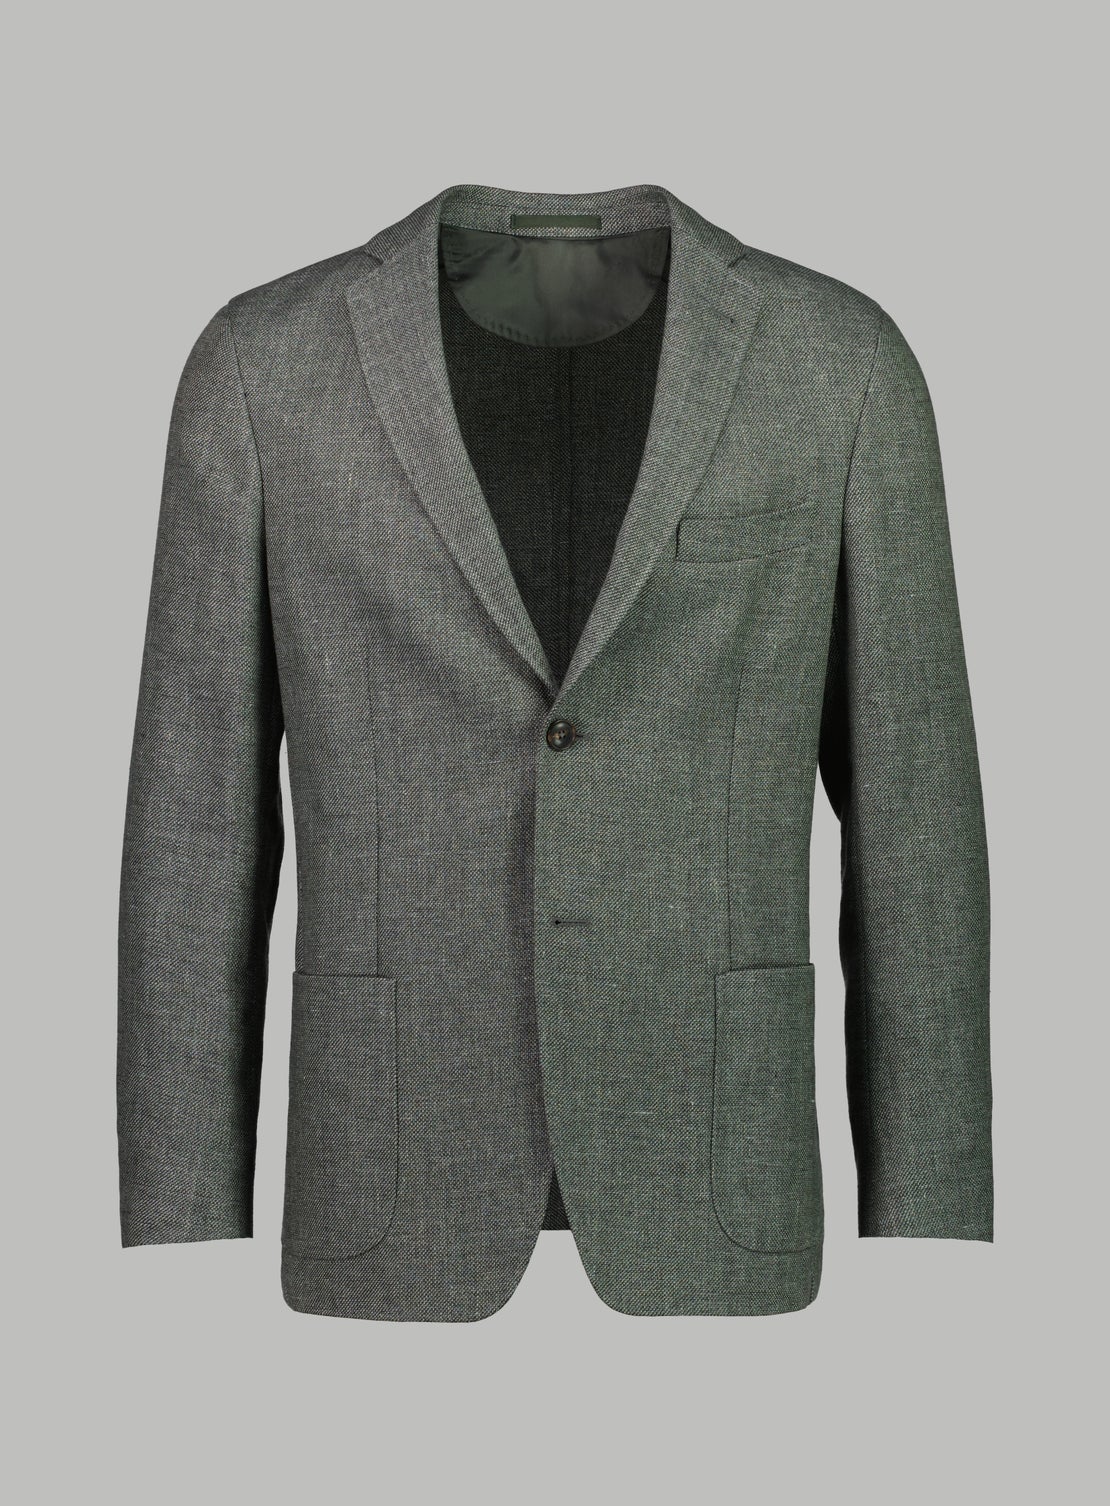 Evora Charcoal Textured Jacket